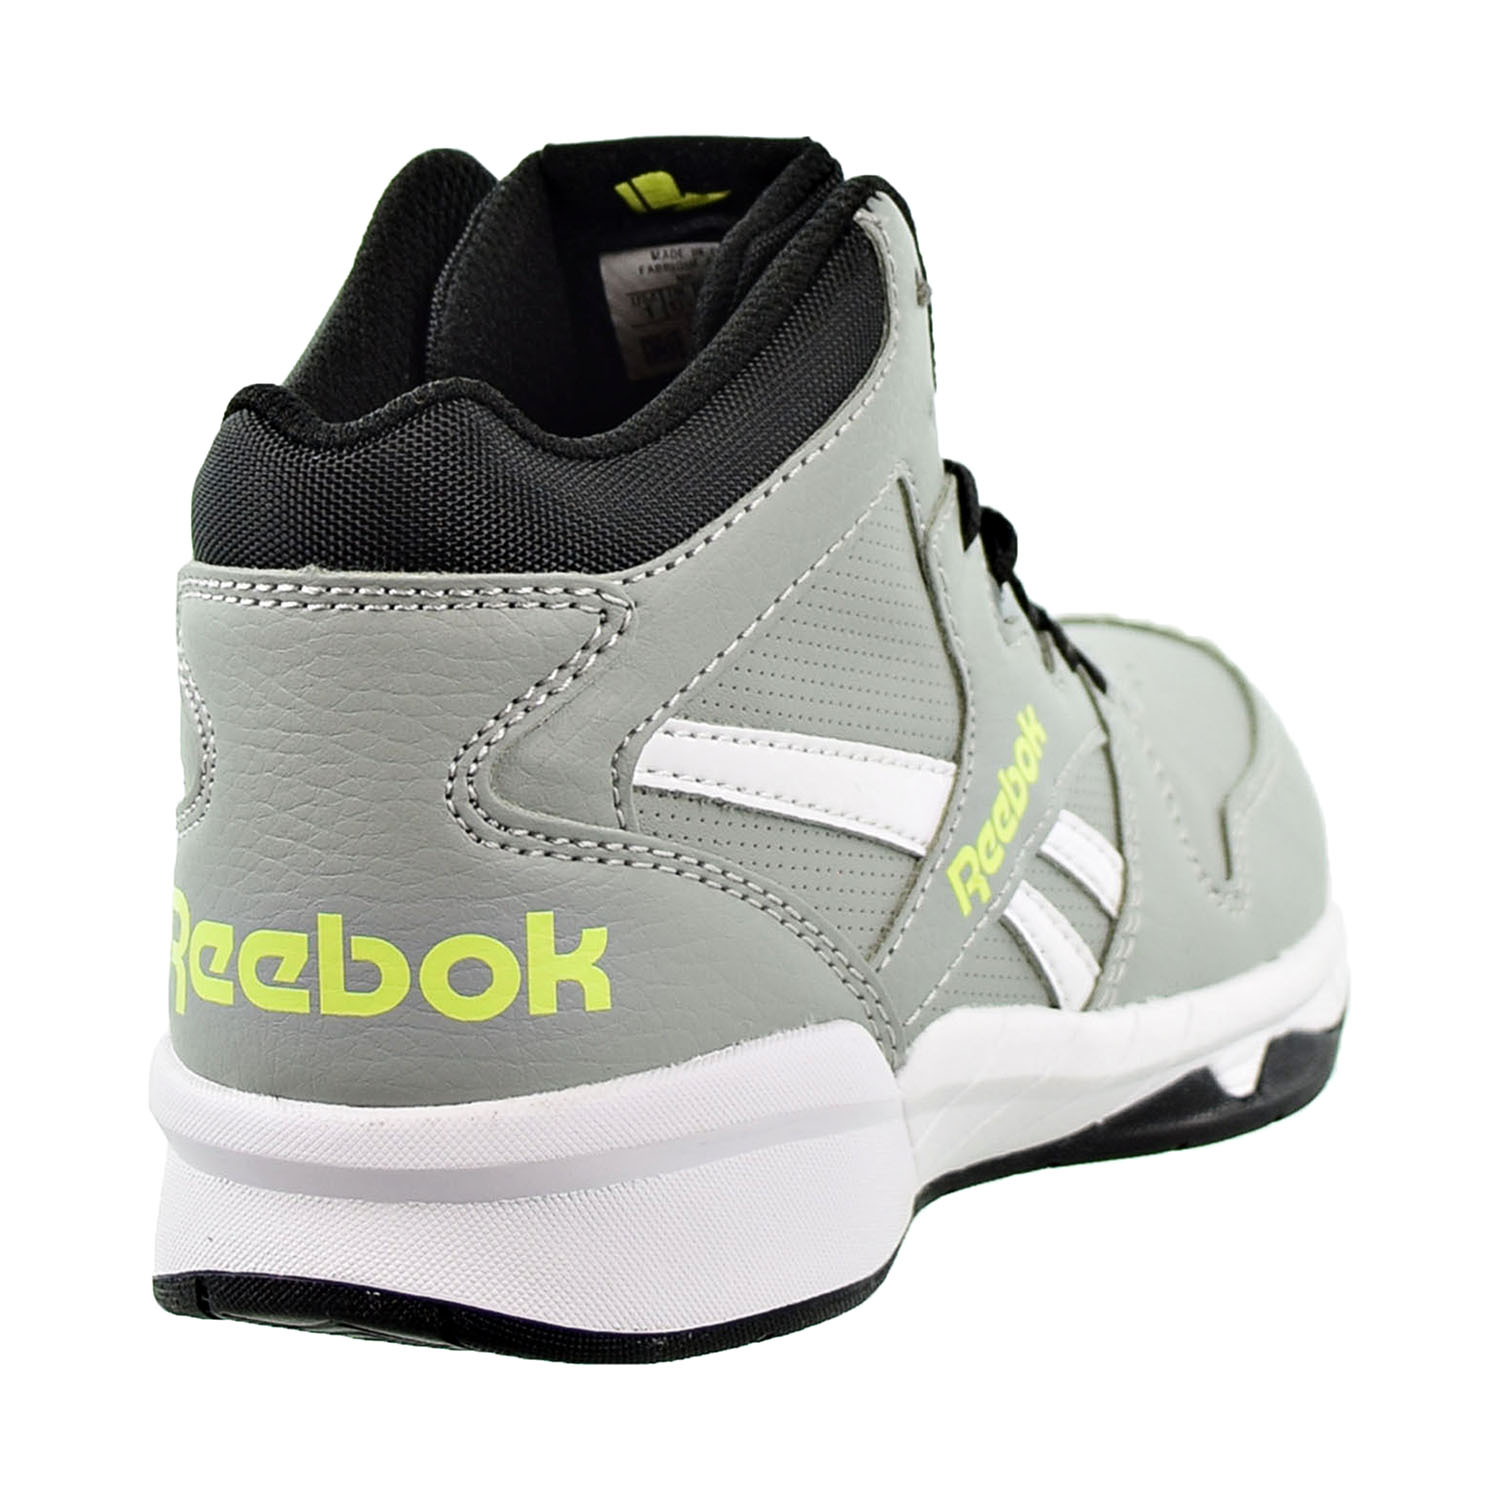 Reebok BB4500 Hi 2 Kids Basketball Shoes Black/Neon Lime dv4180 - image 3 of 6